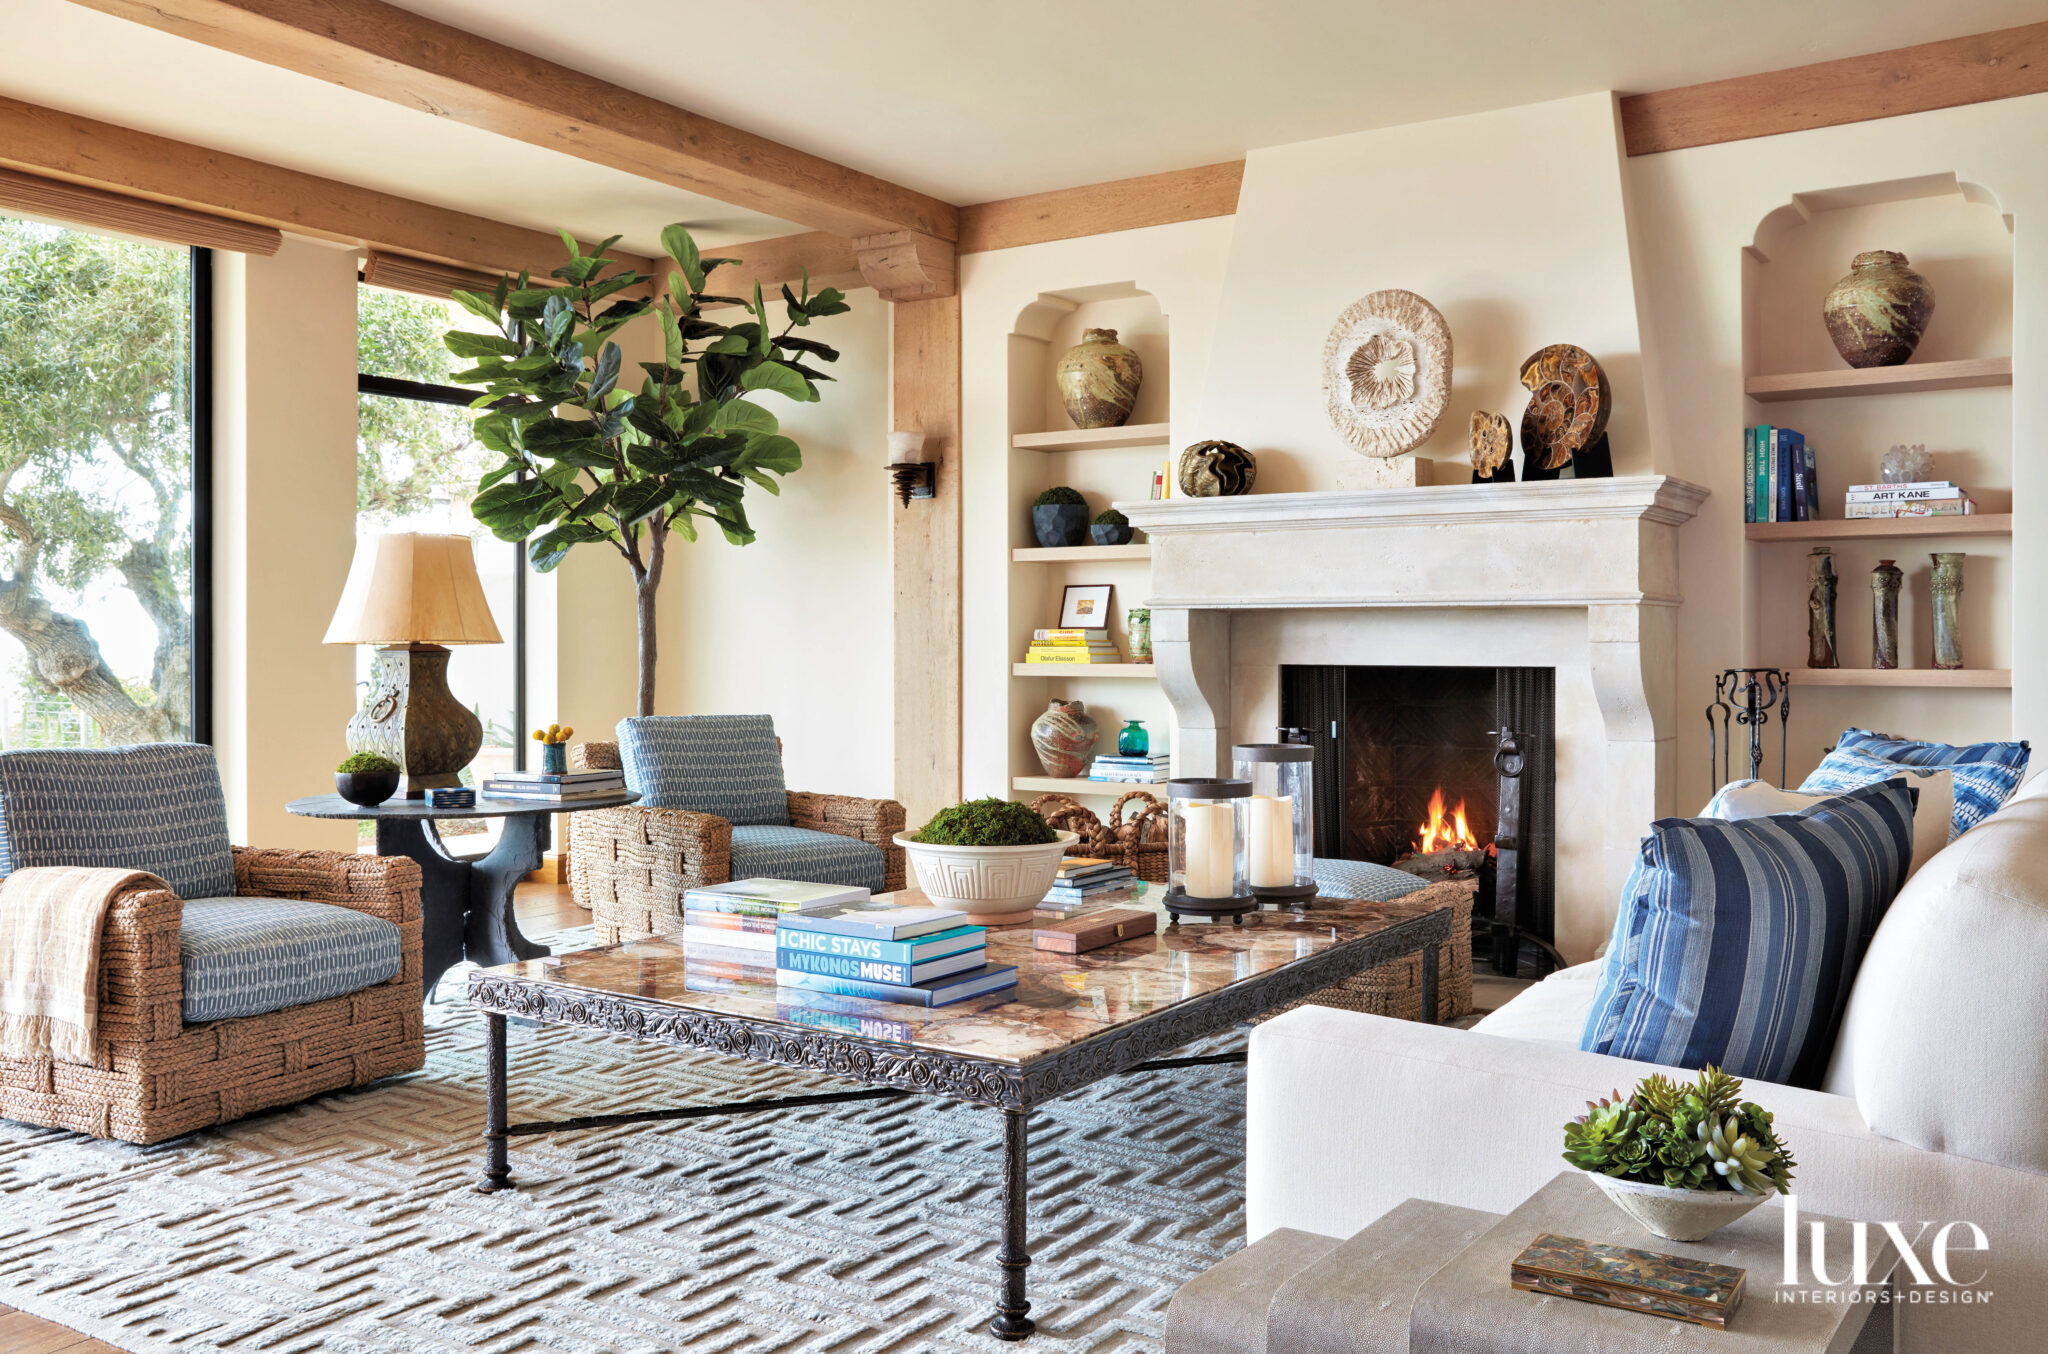 organic modern style living room